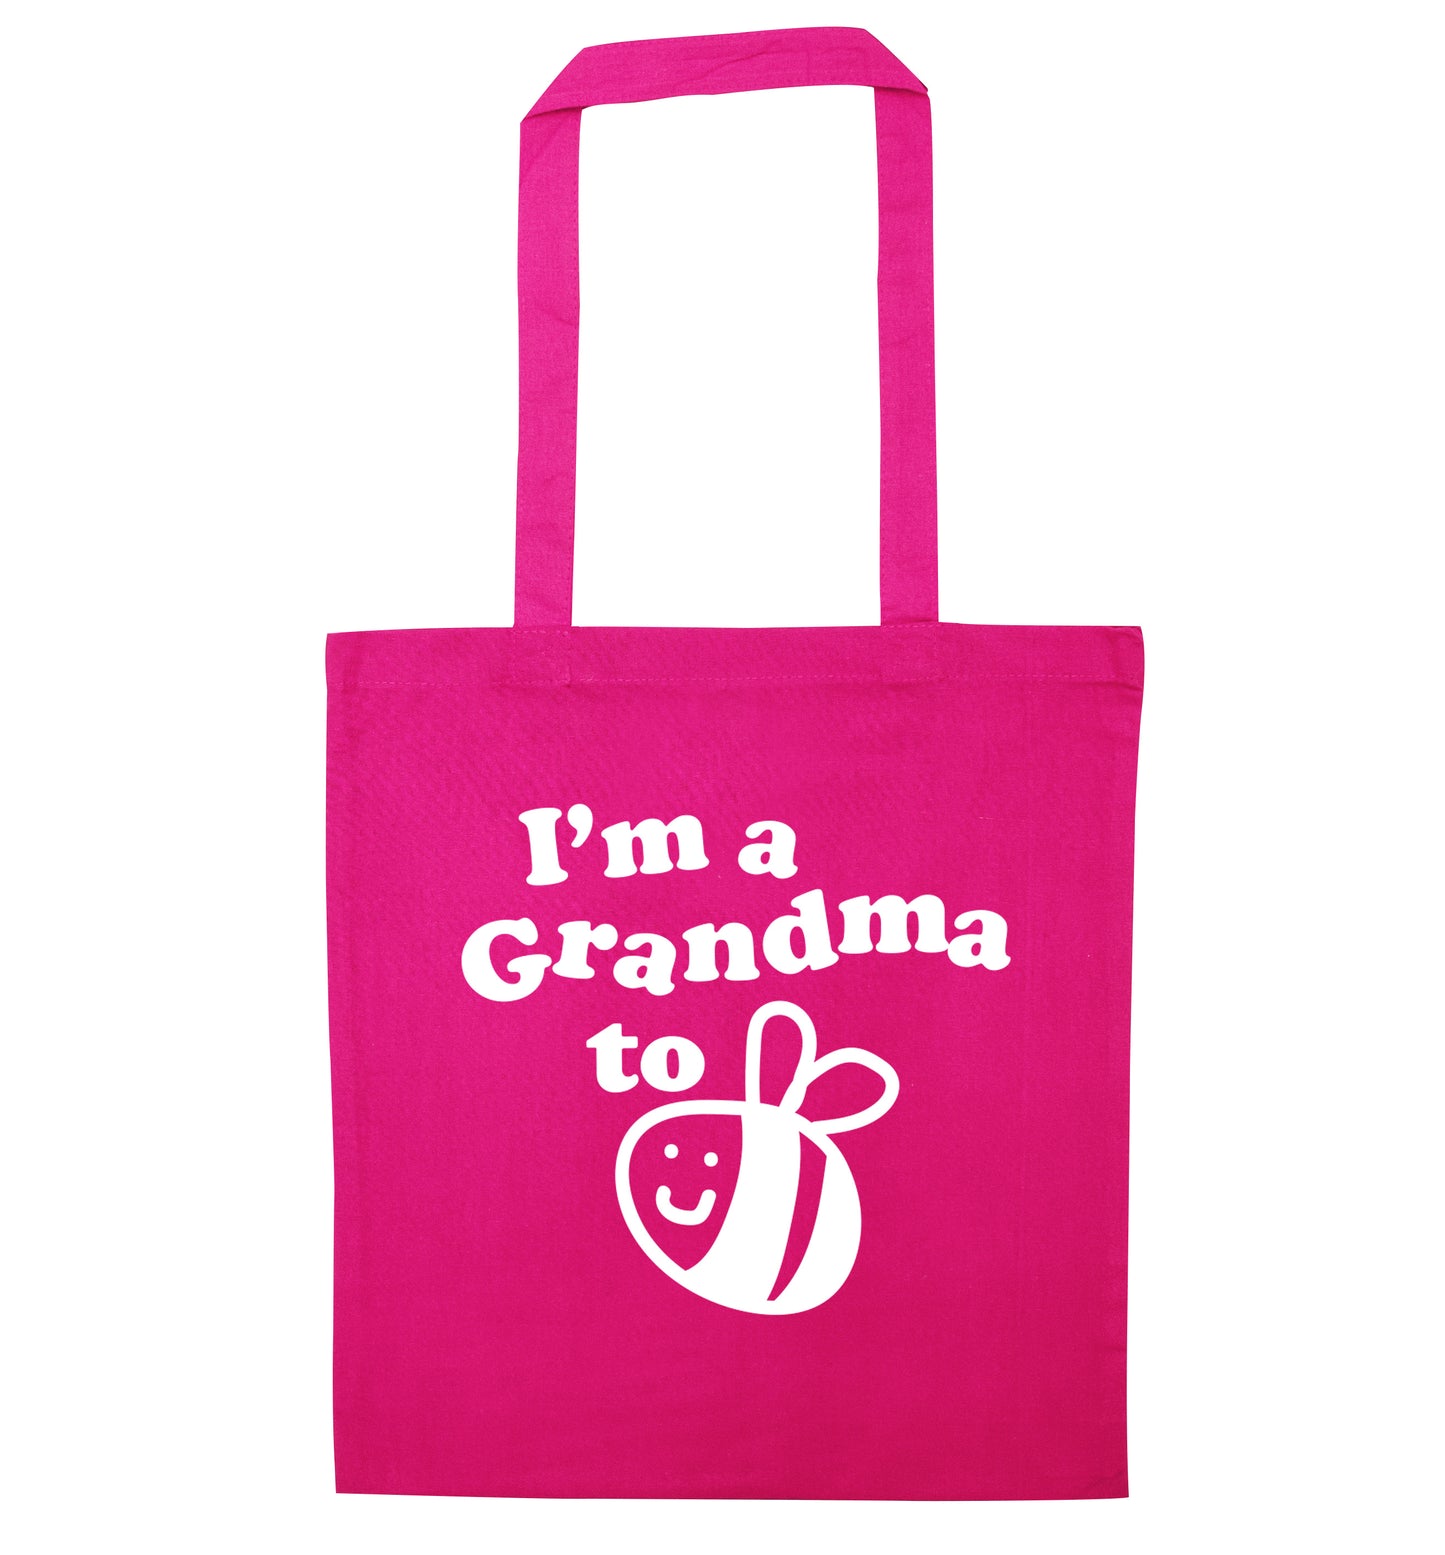 I'm a grandma to be pink tote bag